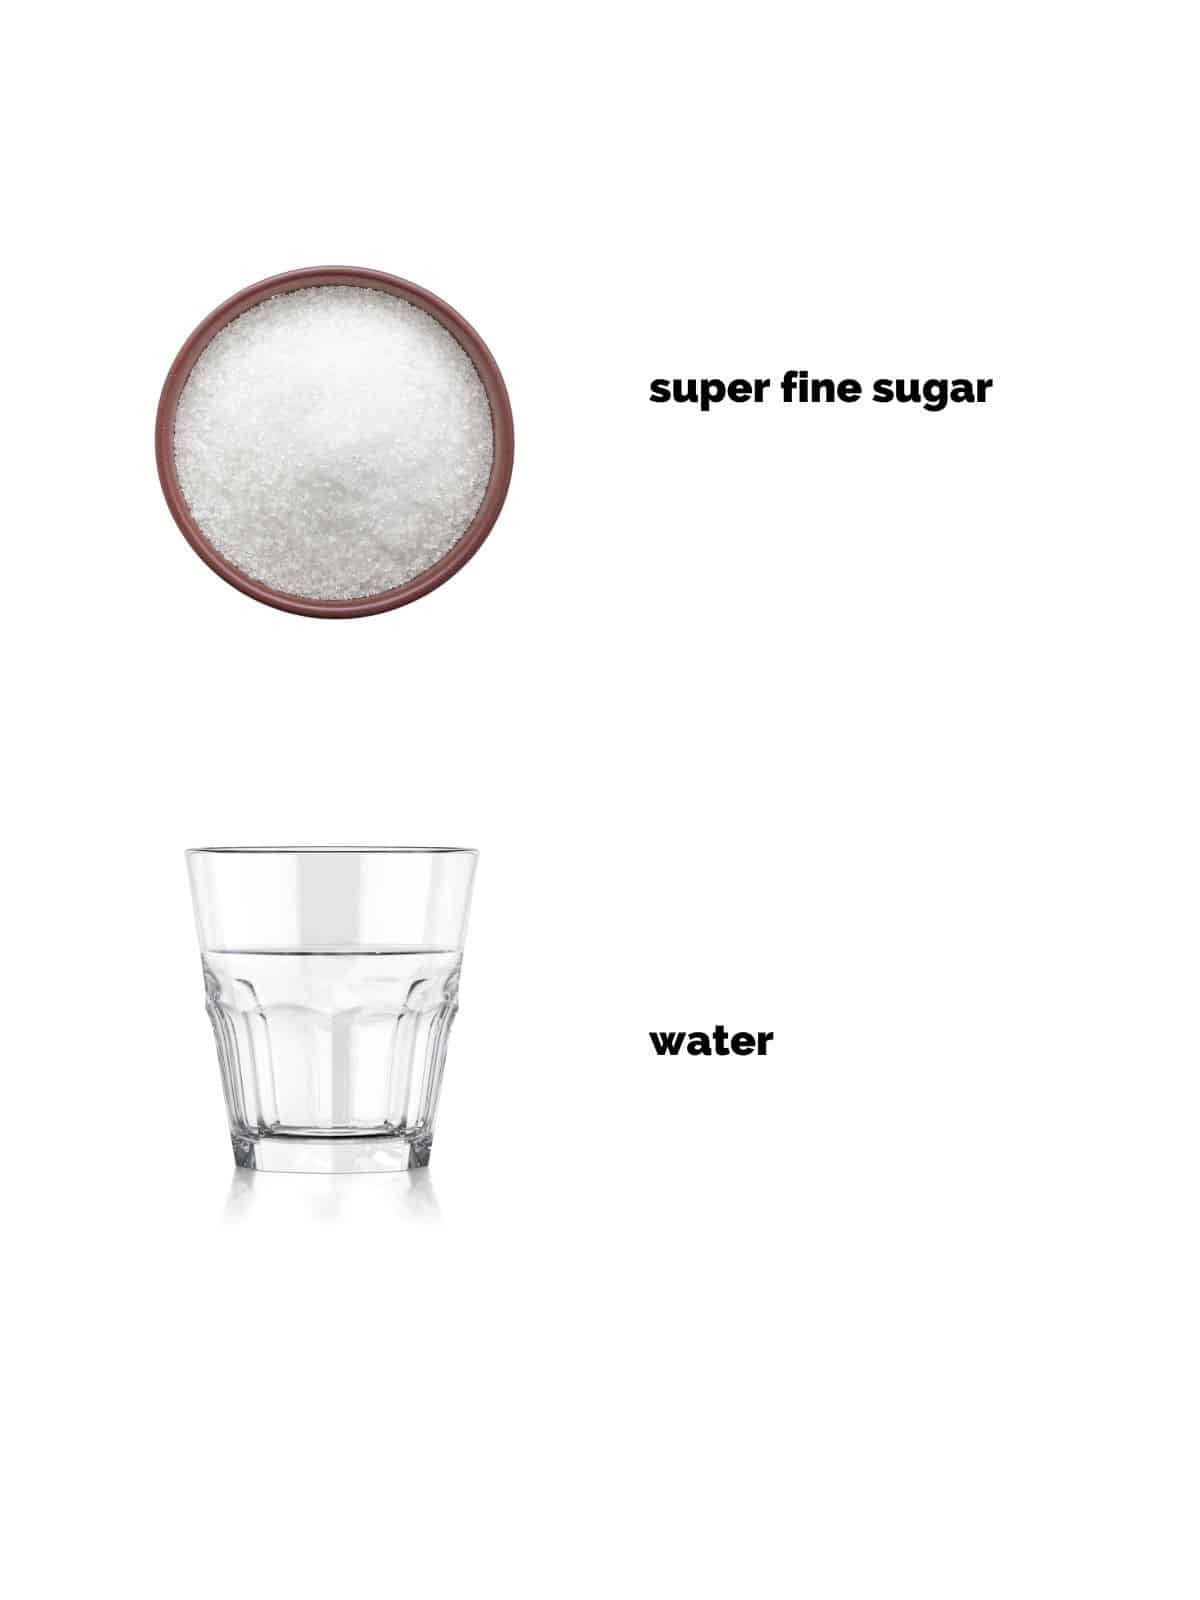 ingredients for making sugar glass